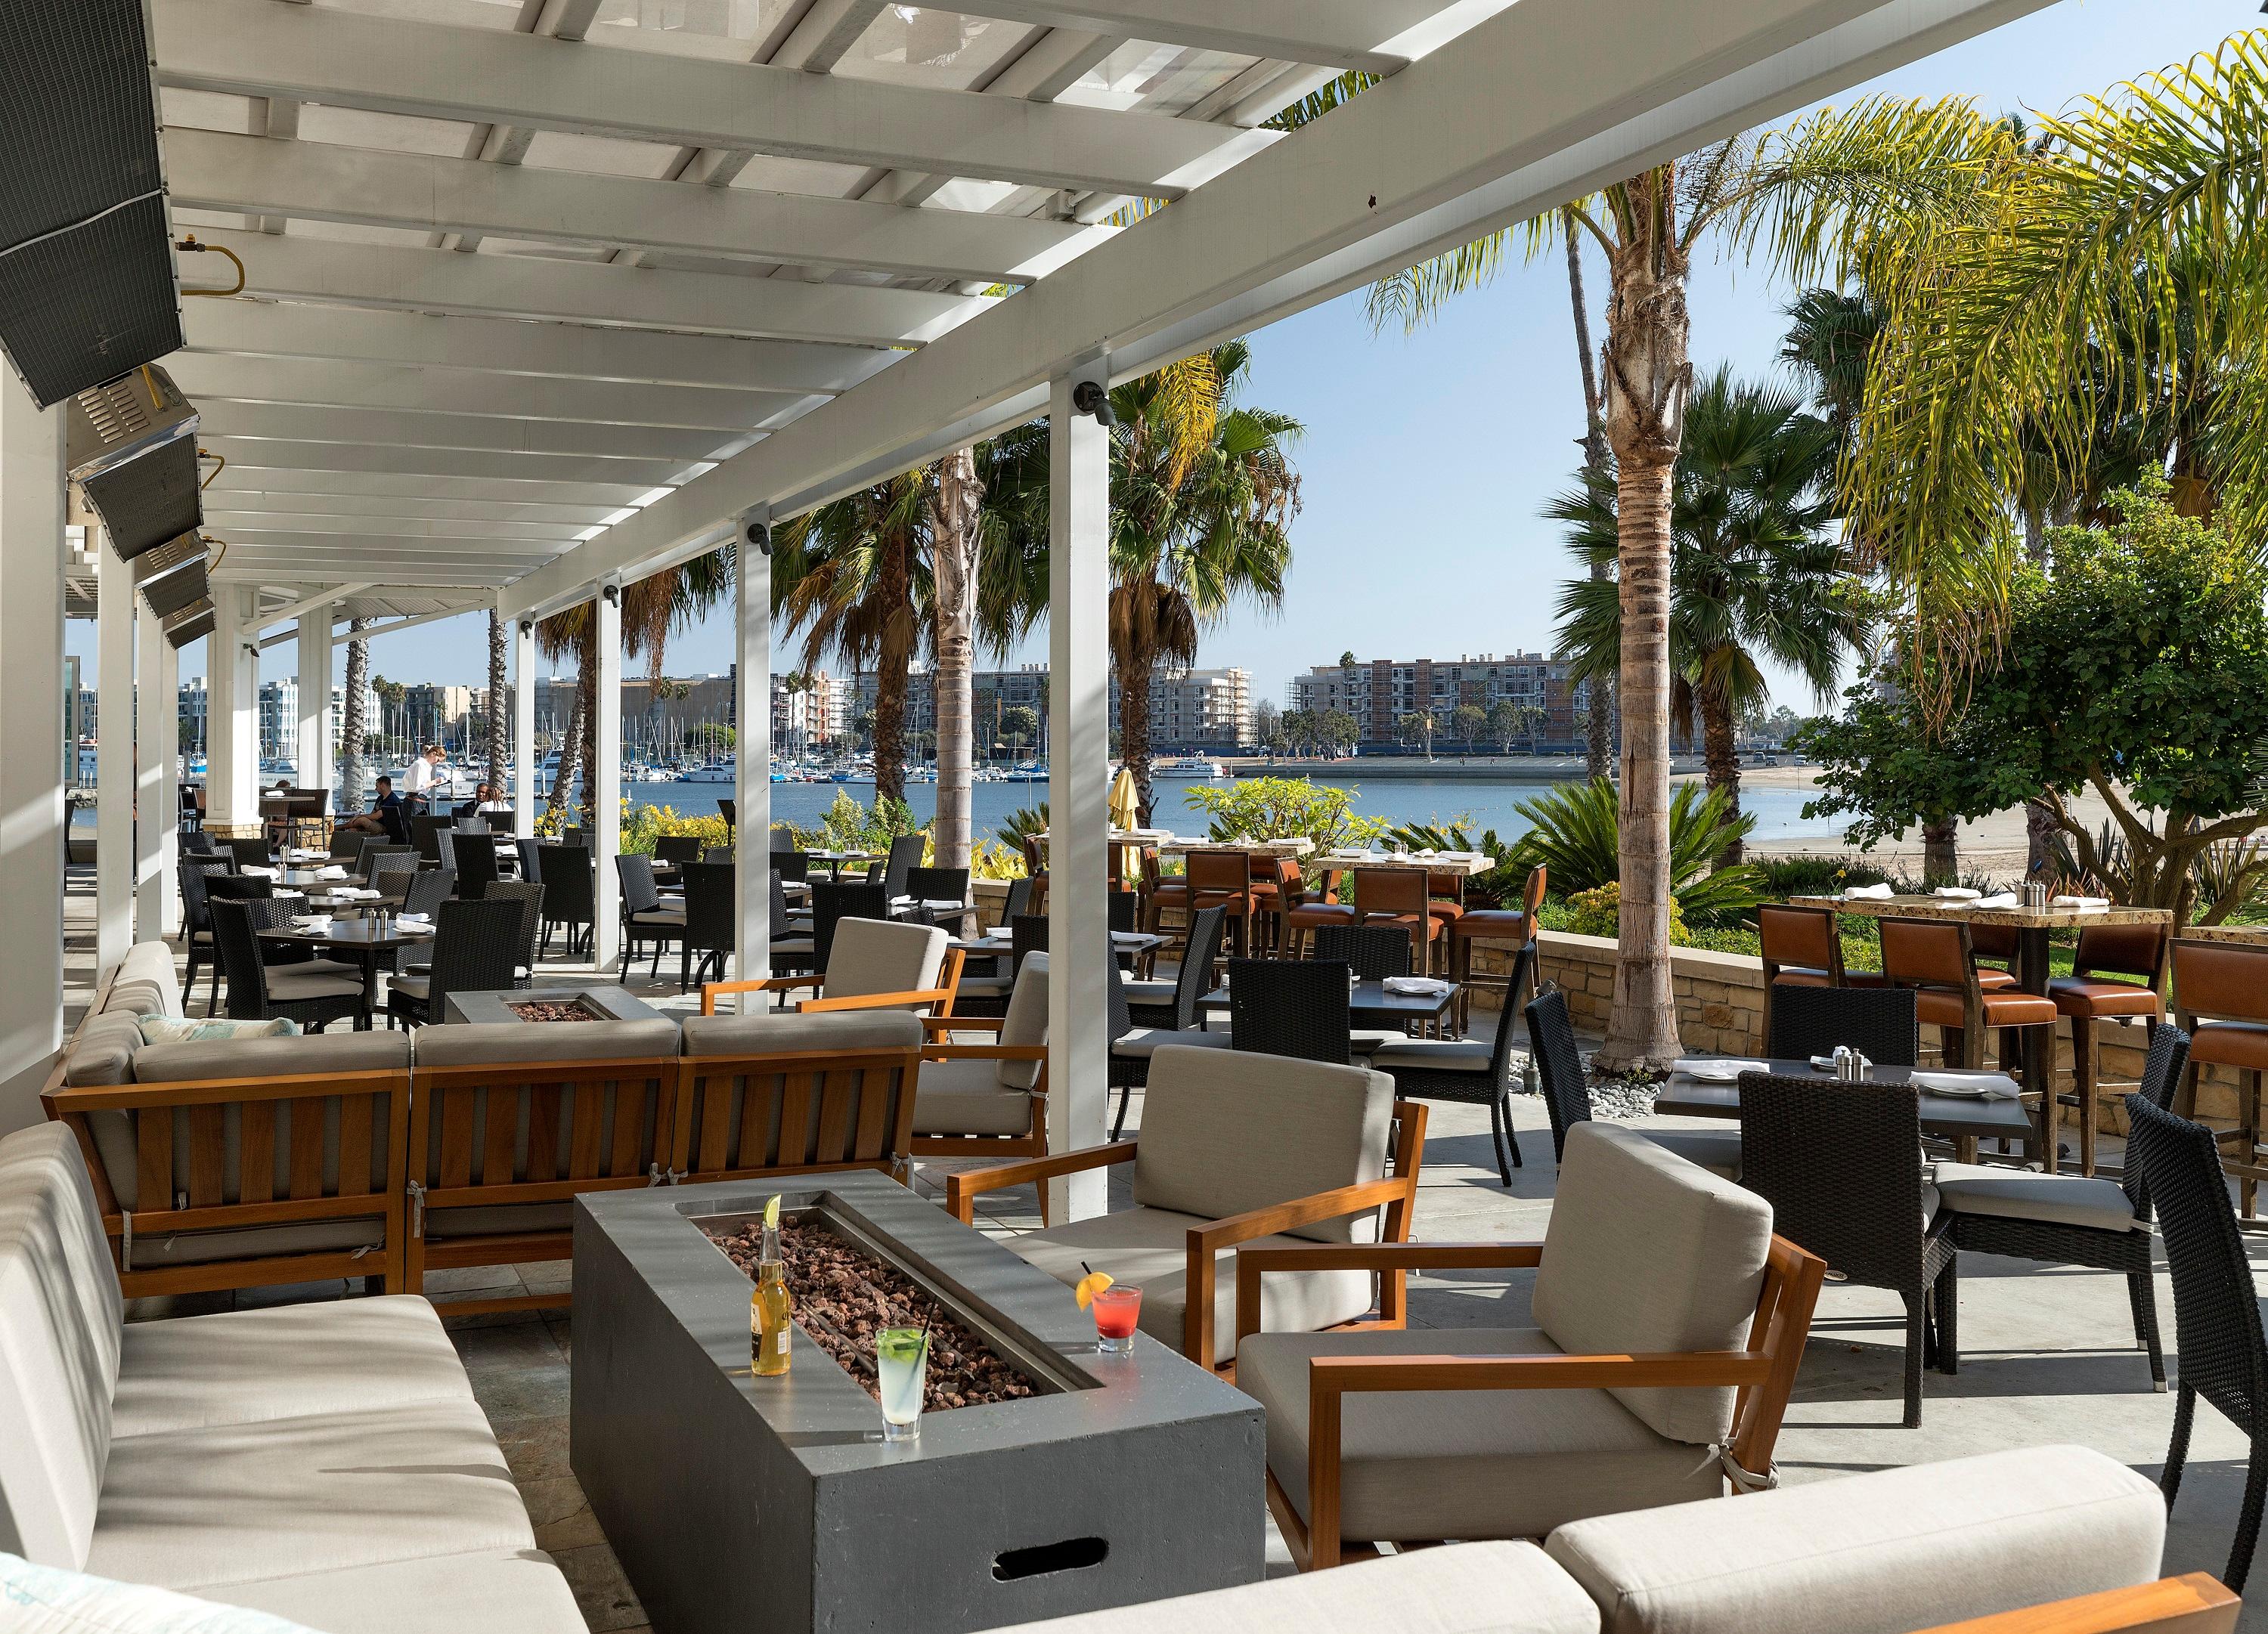 Beachside Restaurant And Bar Marina Del Rey Ca Company Profile